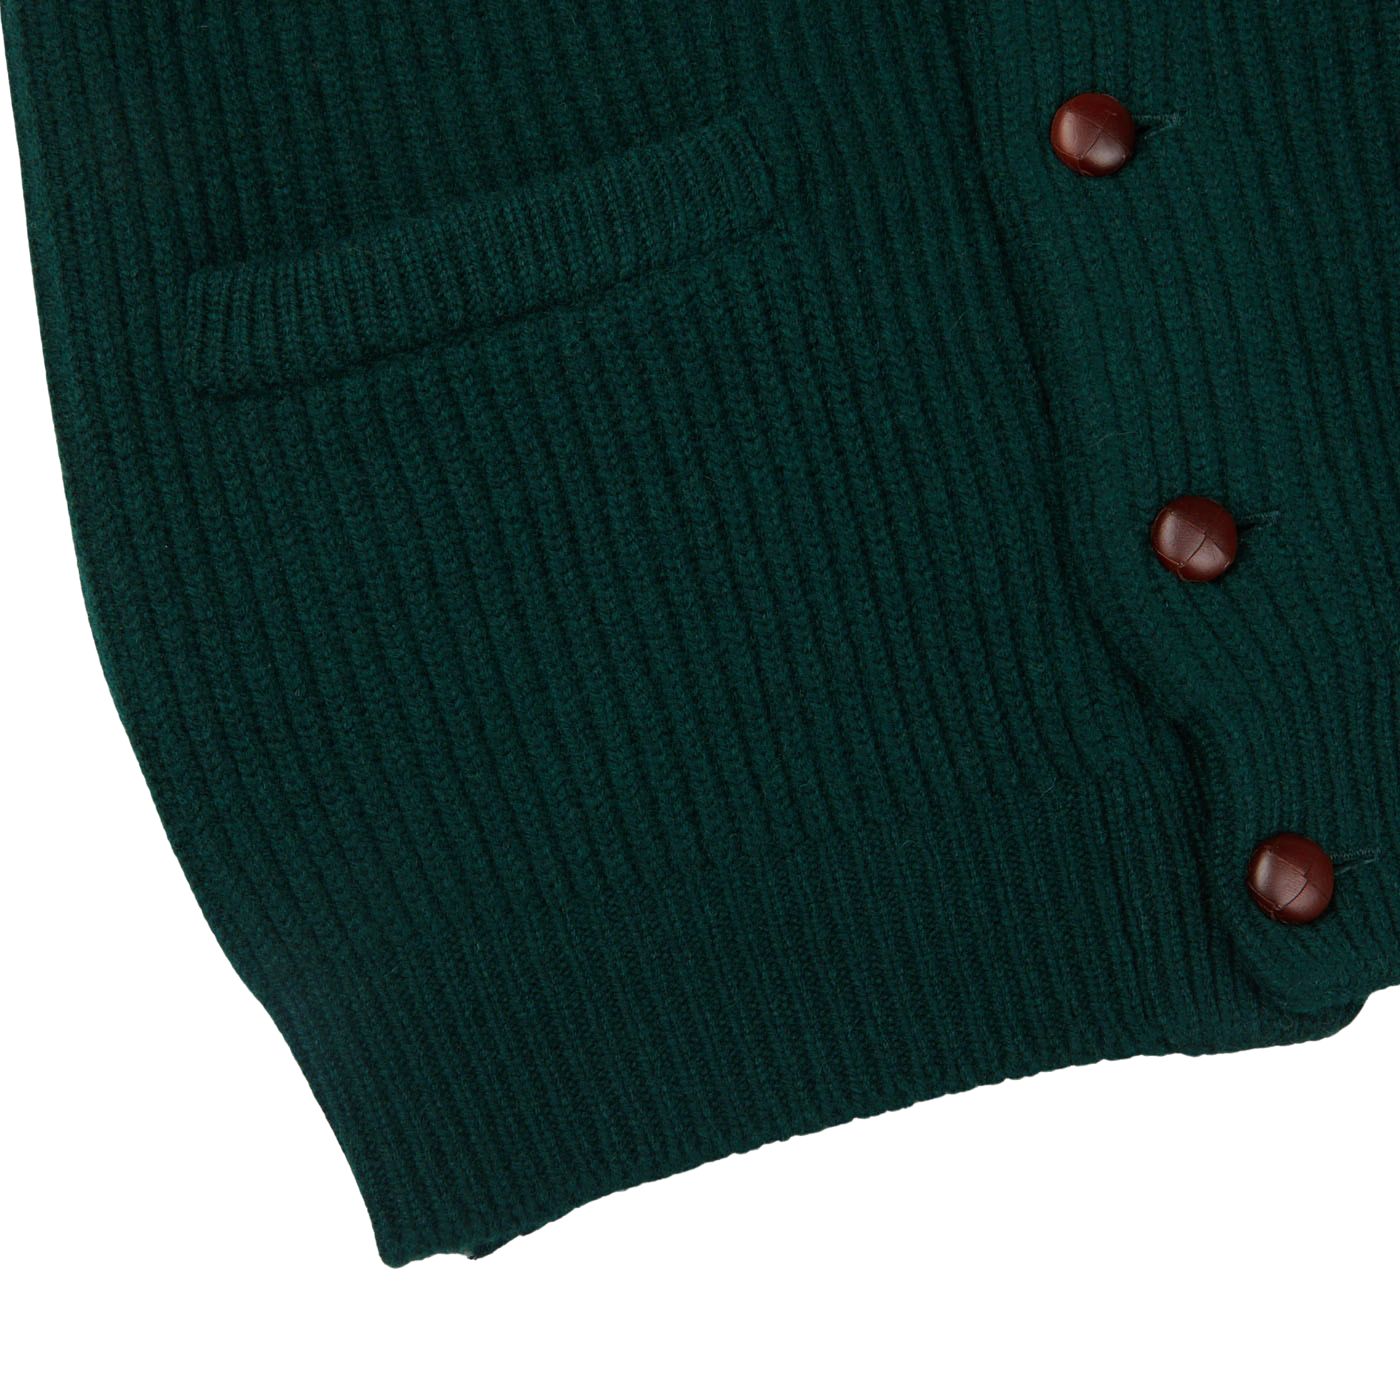 A William Lockie Tartan Green Lambswool Shawl Collar Cardigan with buttons.